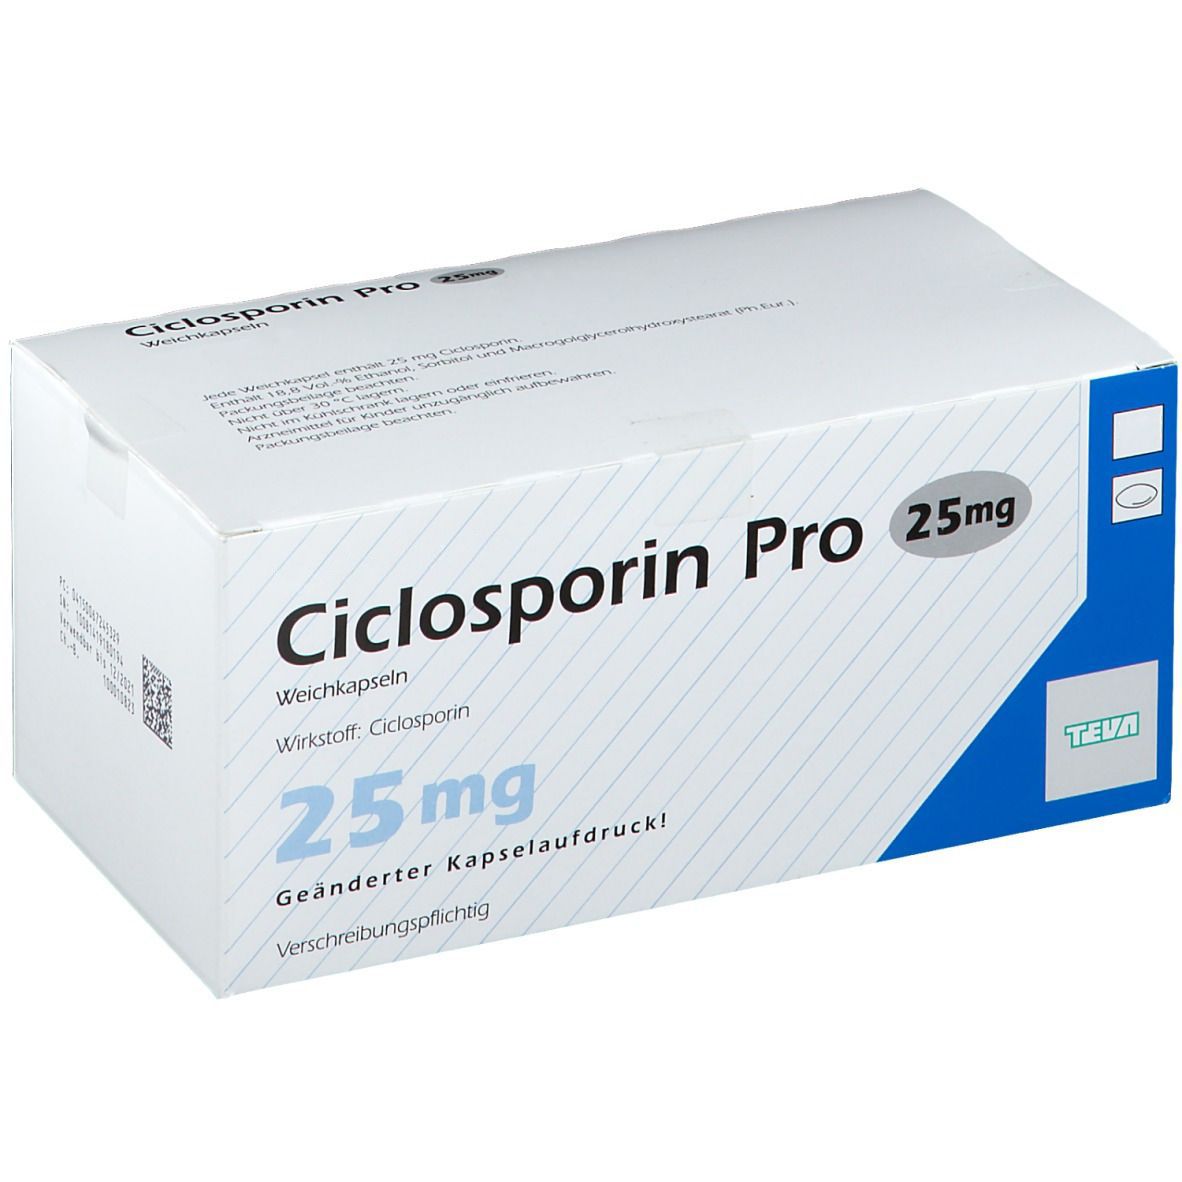 Ciclosporin Pro 25 mg